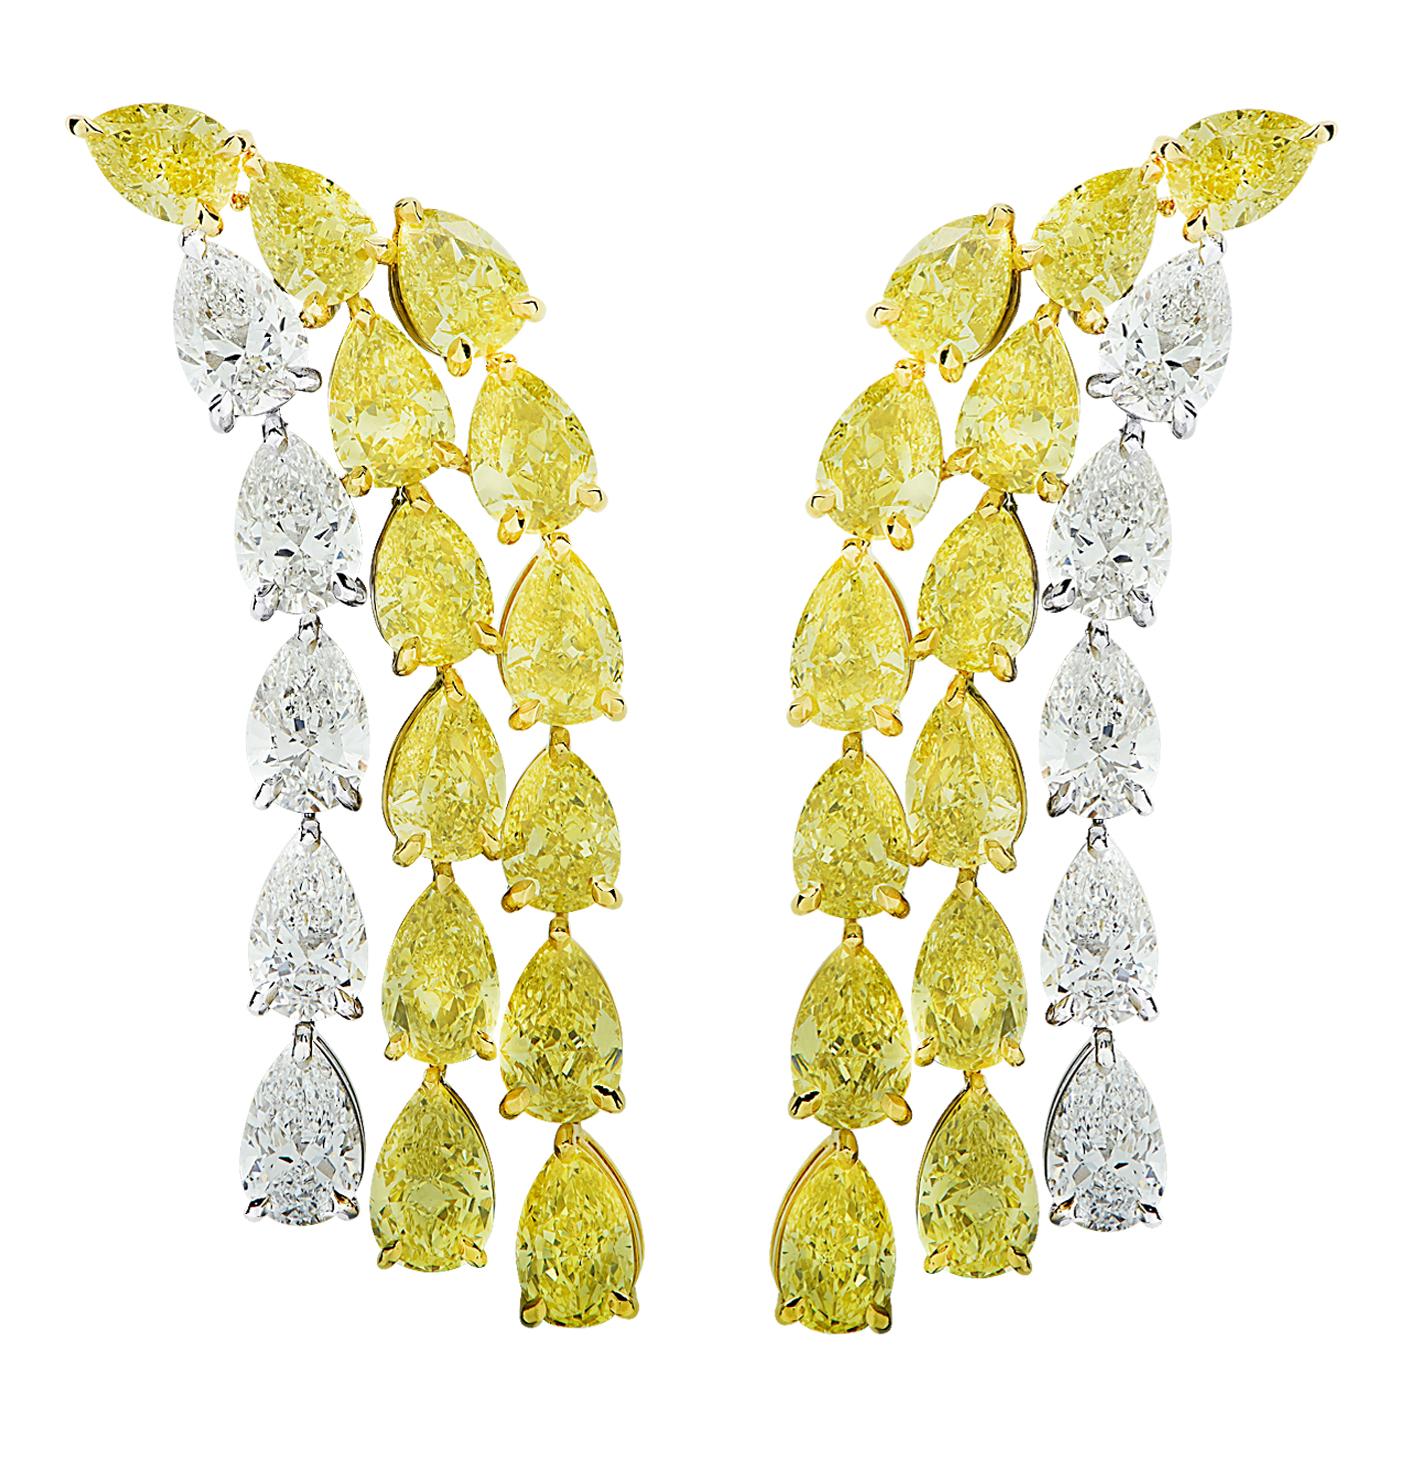 Women's or Men's Vivid Diamonds GIA Certified 19.64 Carat Fancy Intense Yellow Pear Shape Diamond For Sale